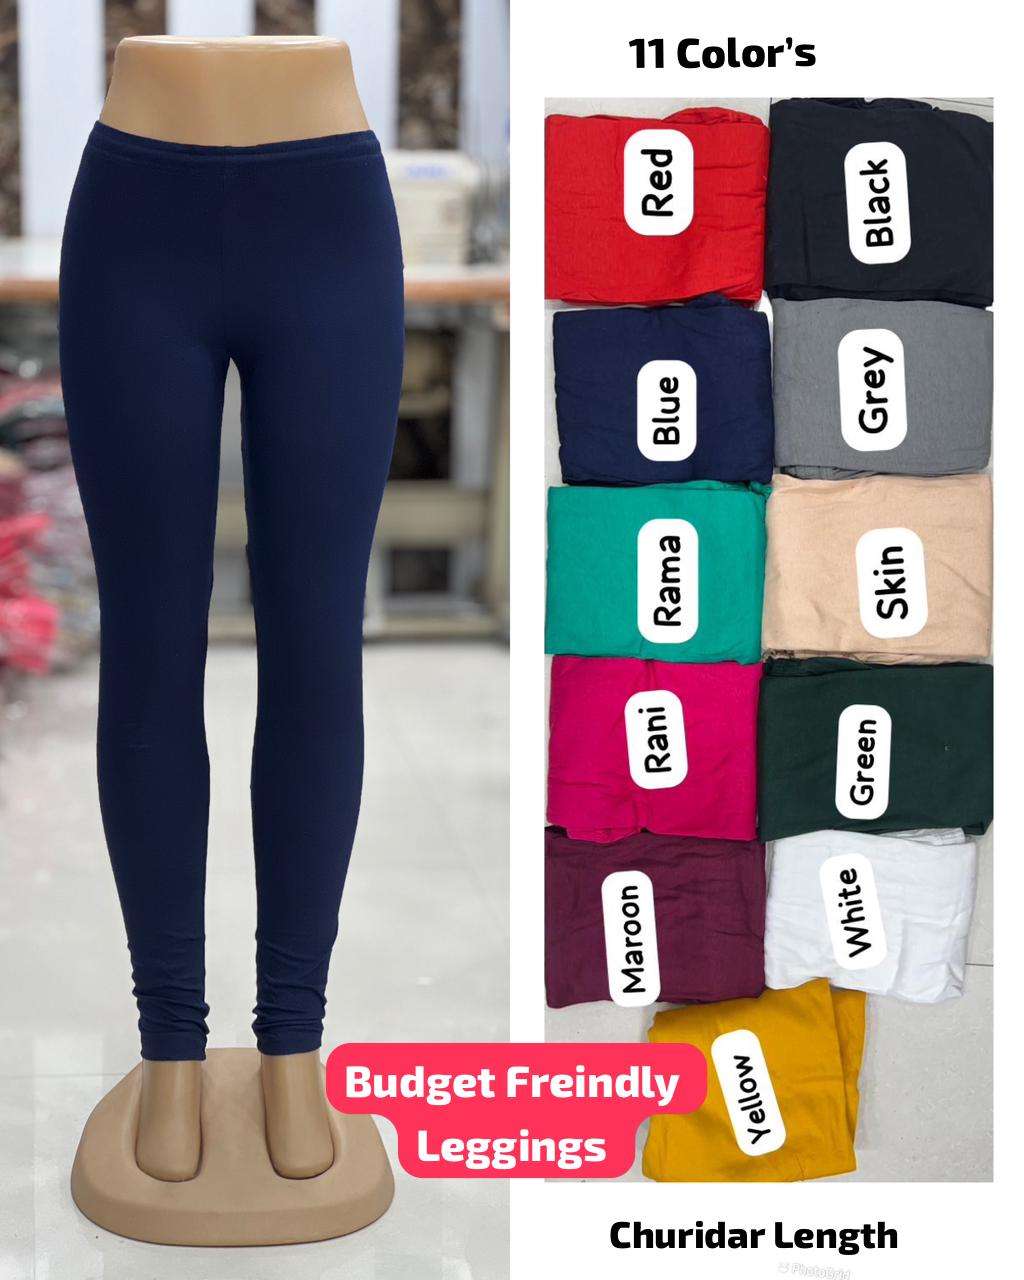 Budget Friendly Leggings  Churidar Length 11 Colors Fabric Cotton Lycra Size L to XXL Elastic plus Nada inside bottomwear 